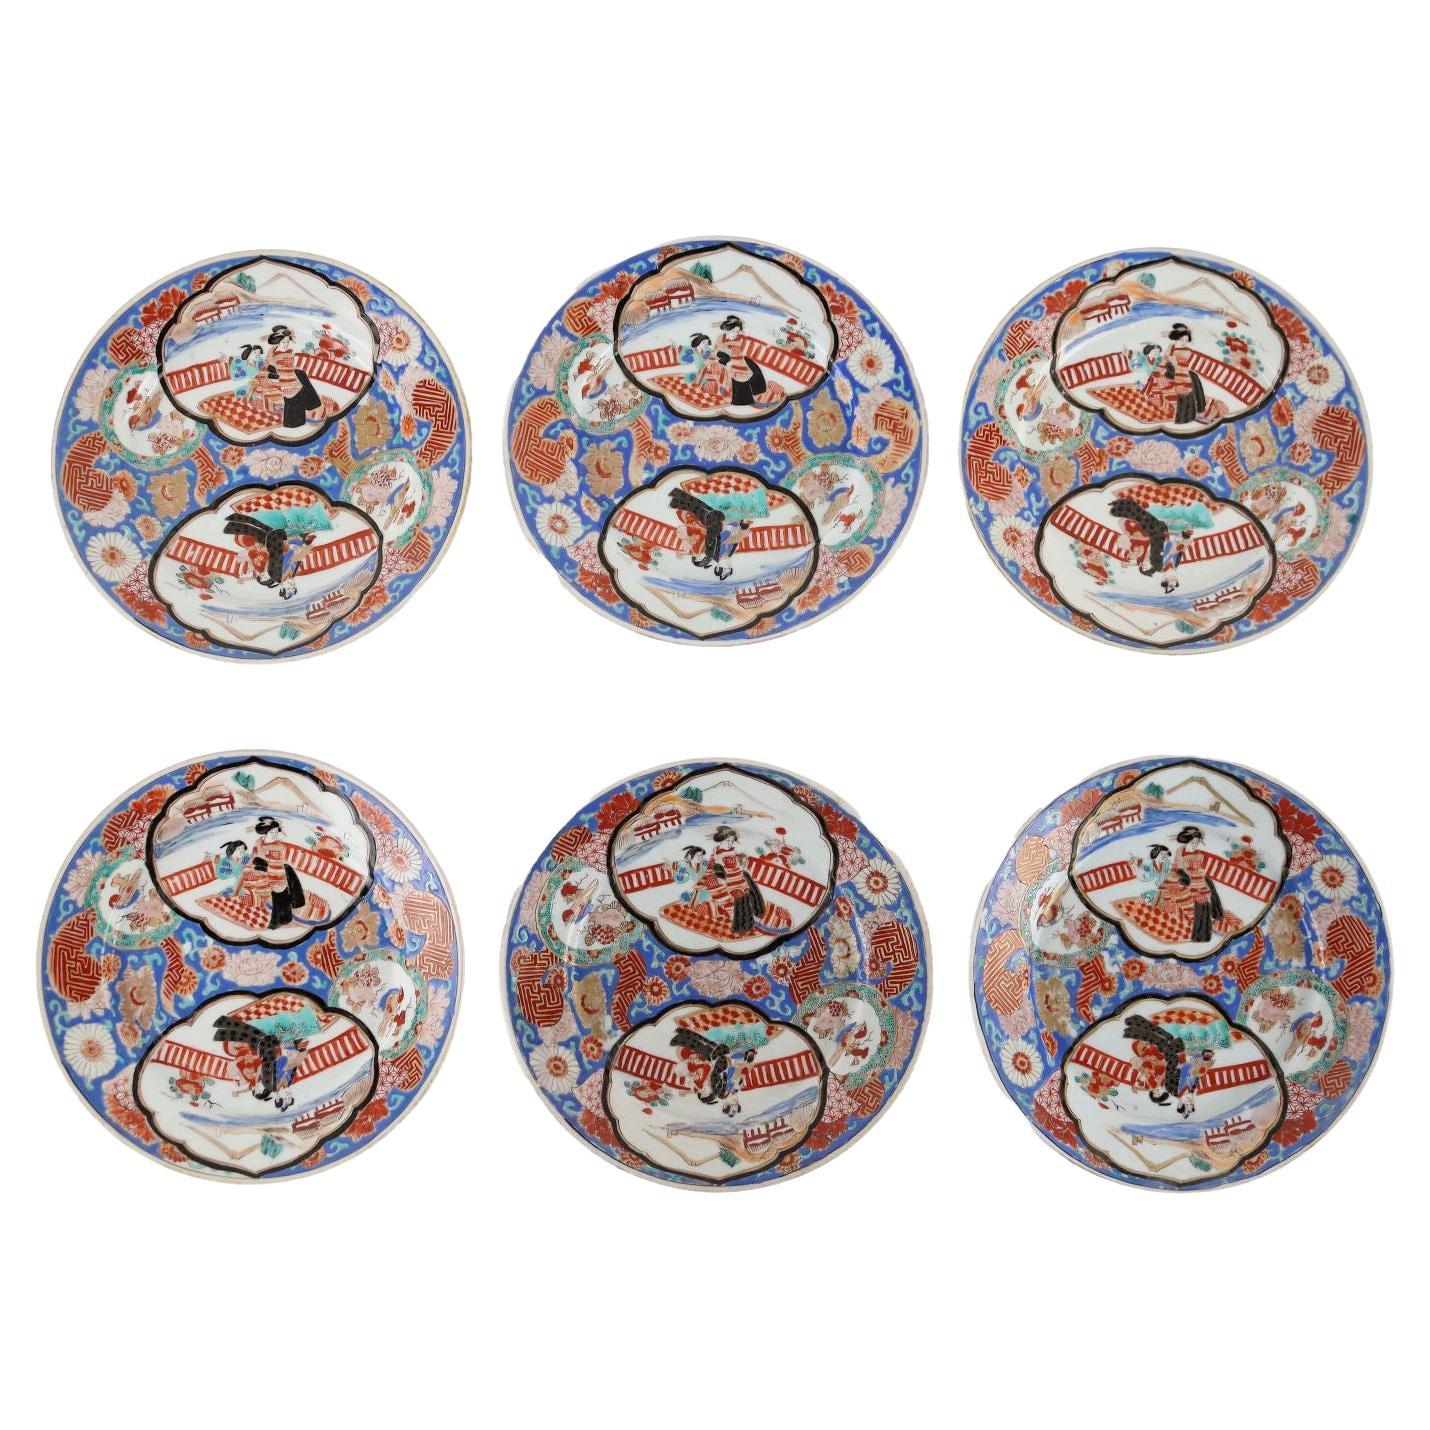 Group of 6 Plates Porcelain Japan 19th-20th Century, Japan, Meiji Era